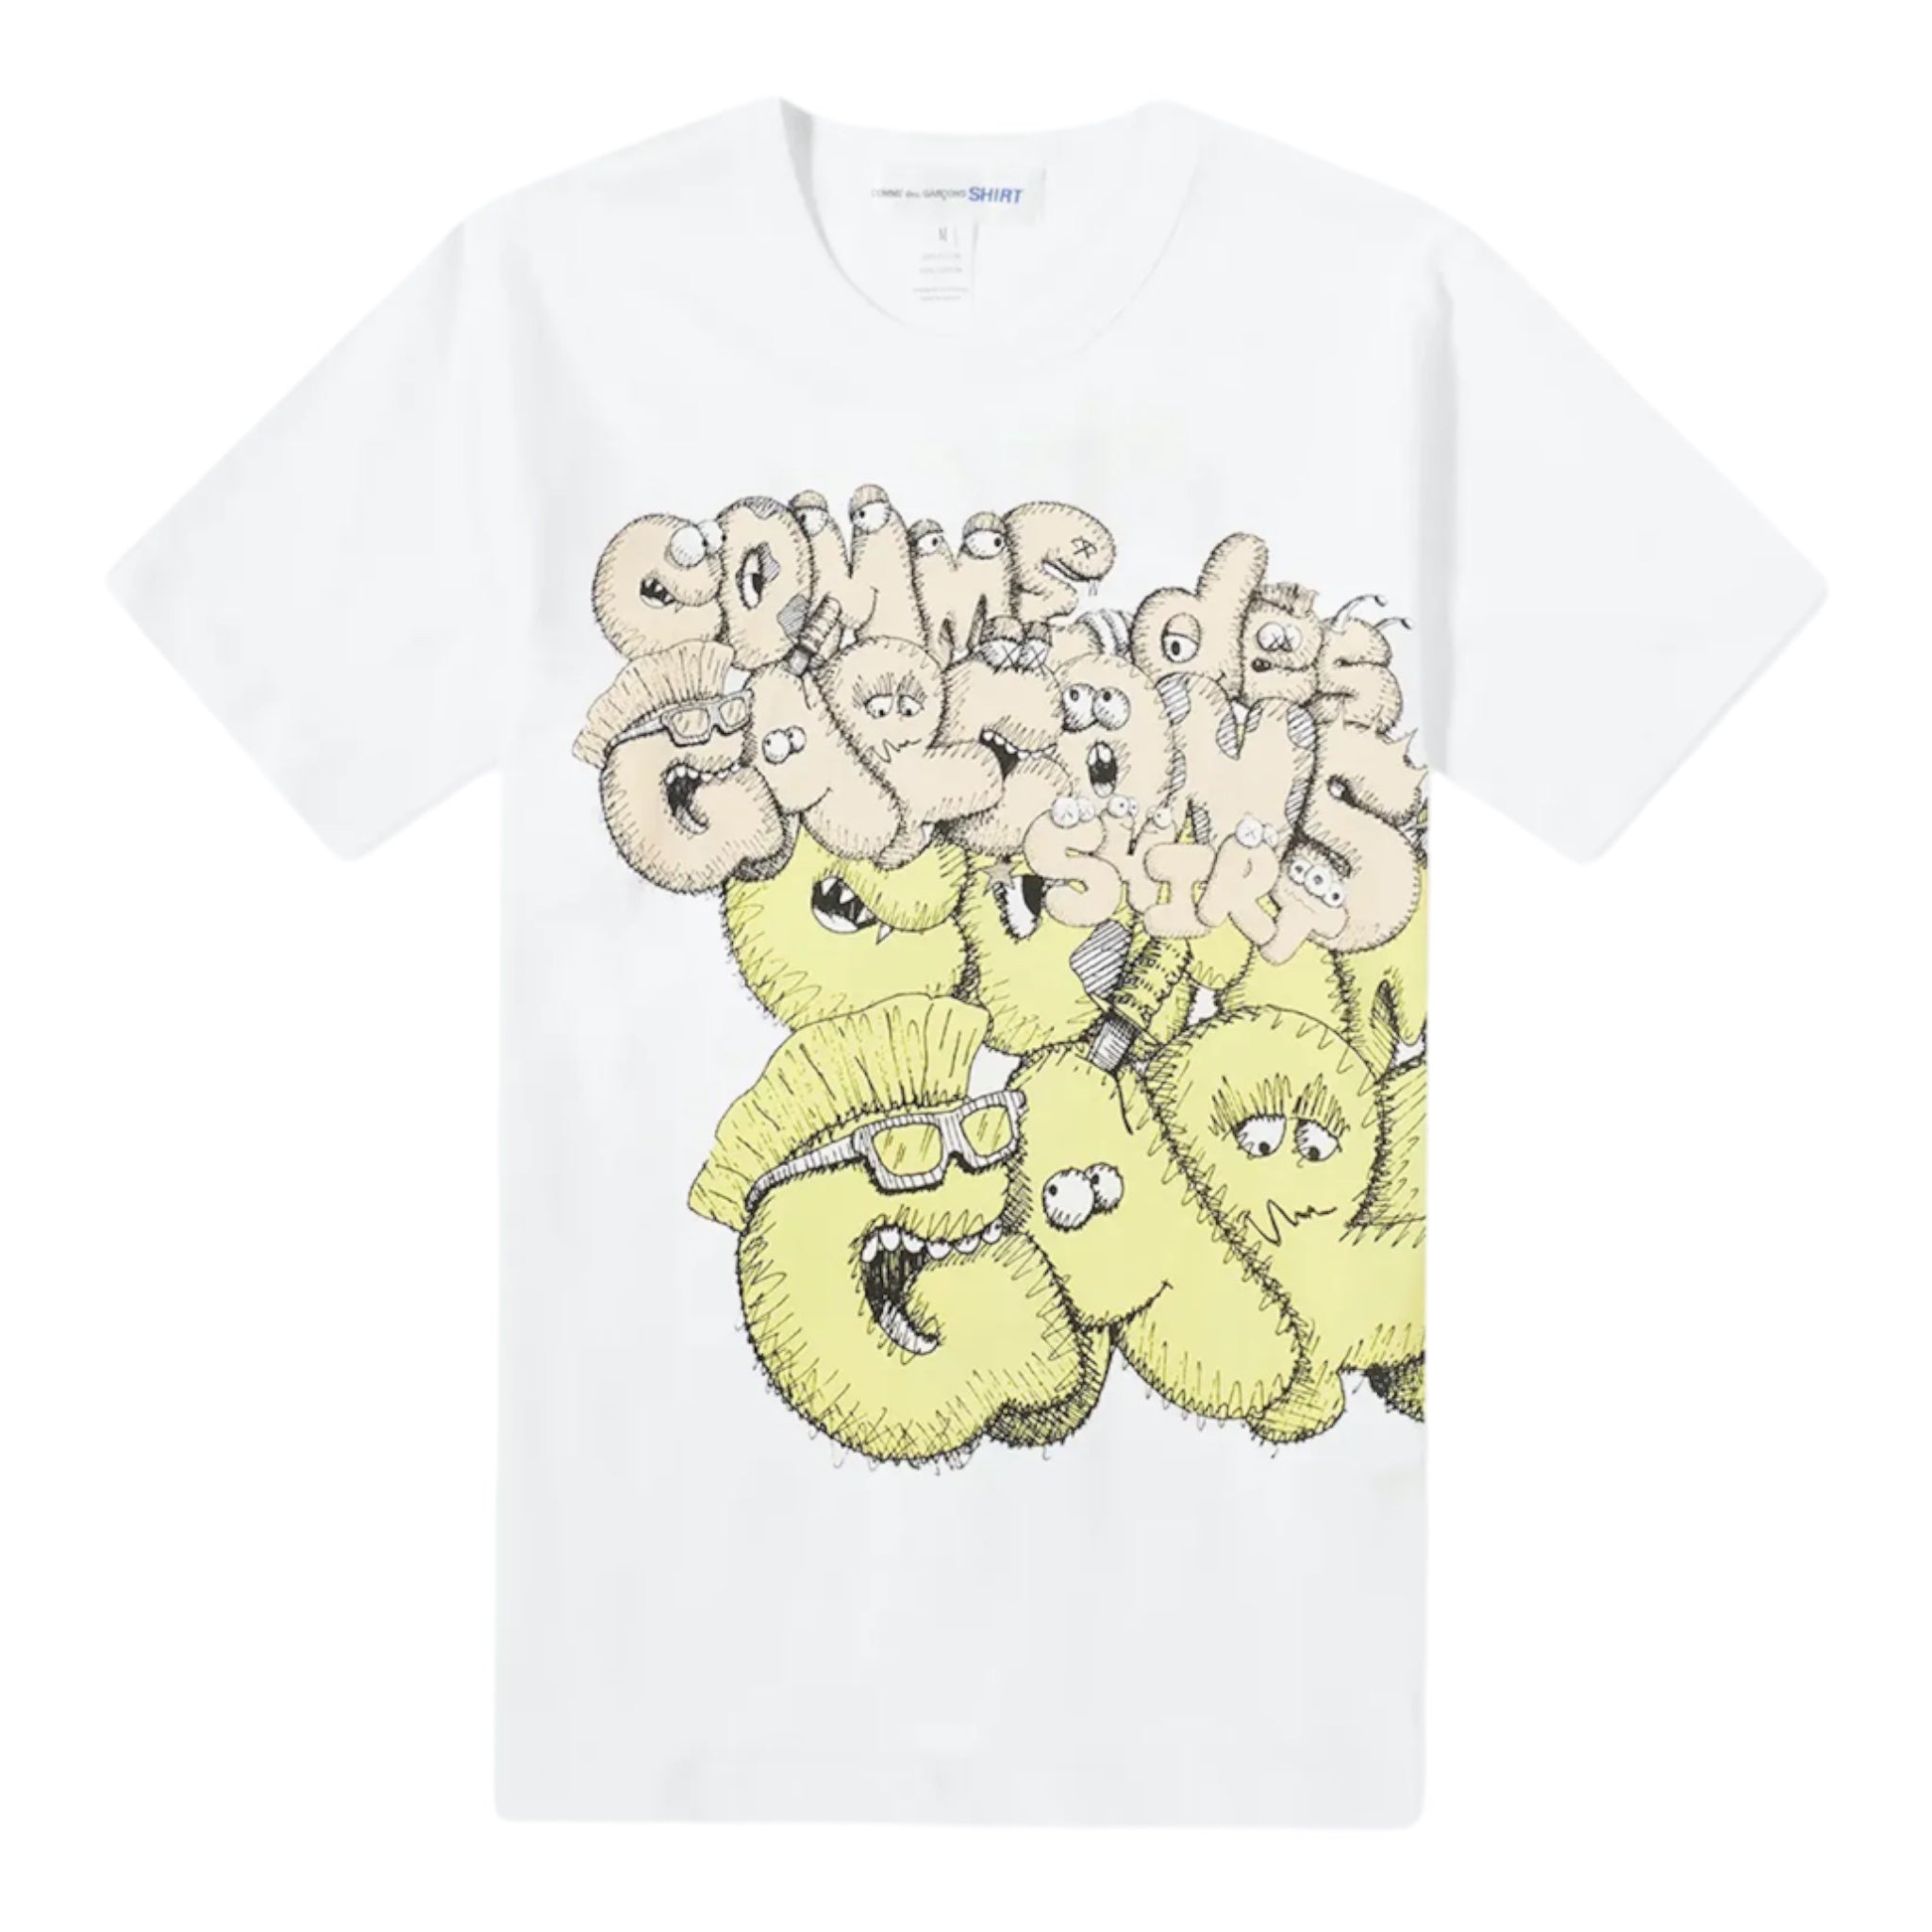 Comme des Garcons Shirt x KAWS Shirt - White & Yellow Graphic Shirt